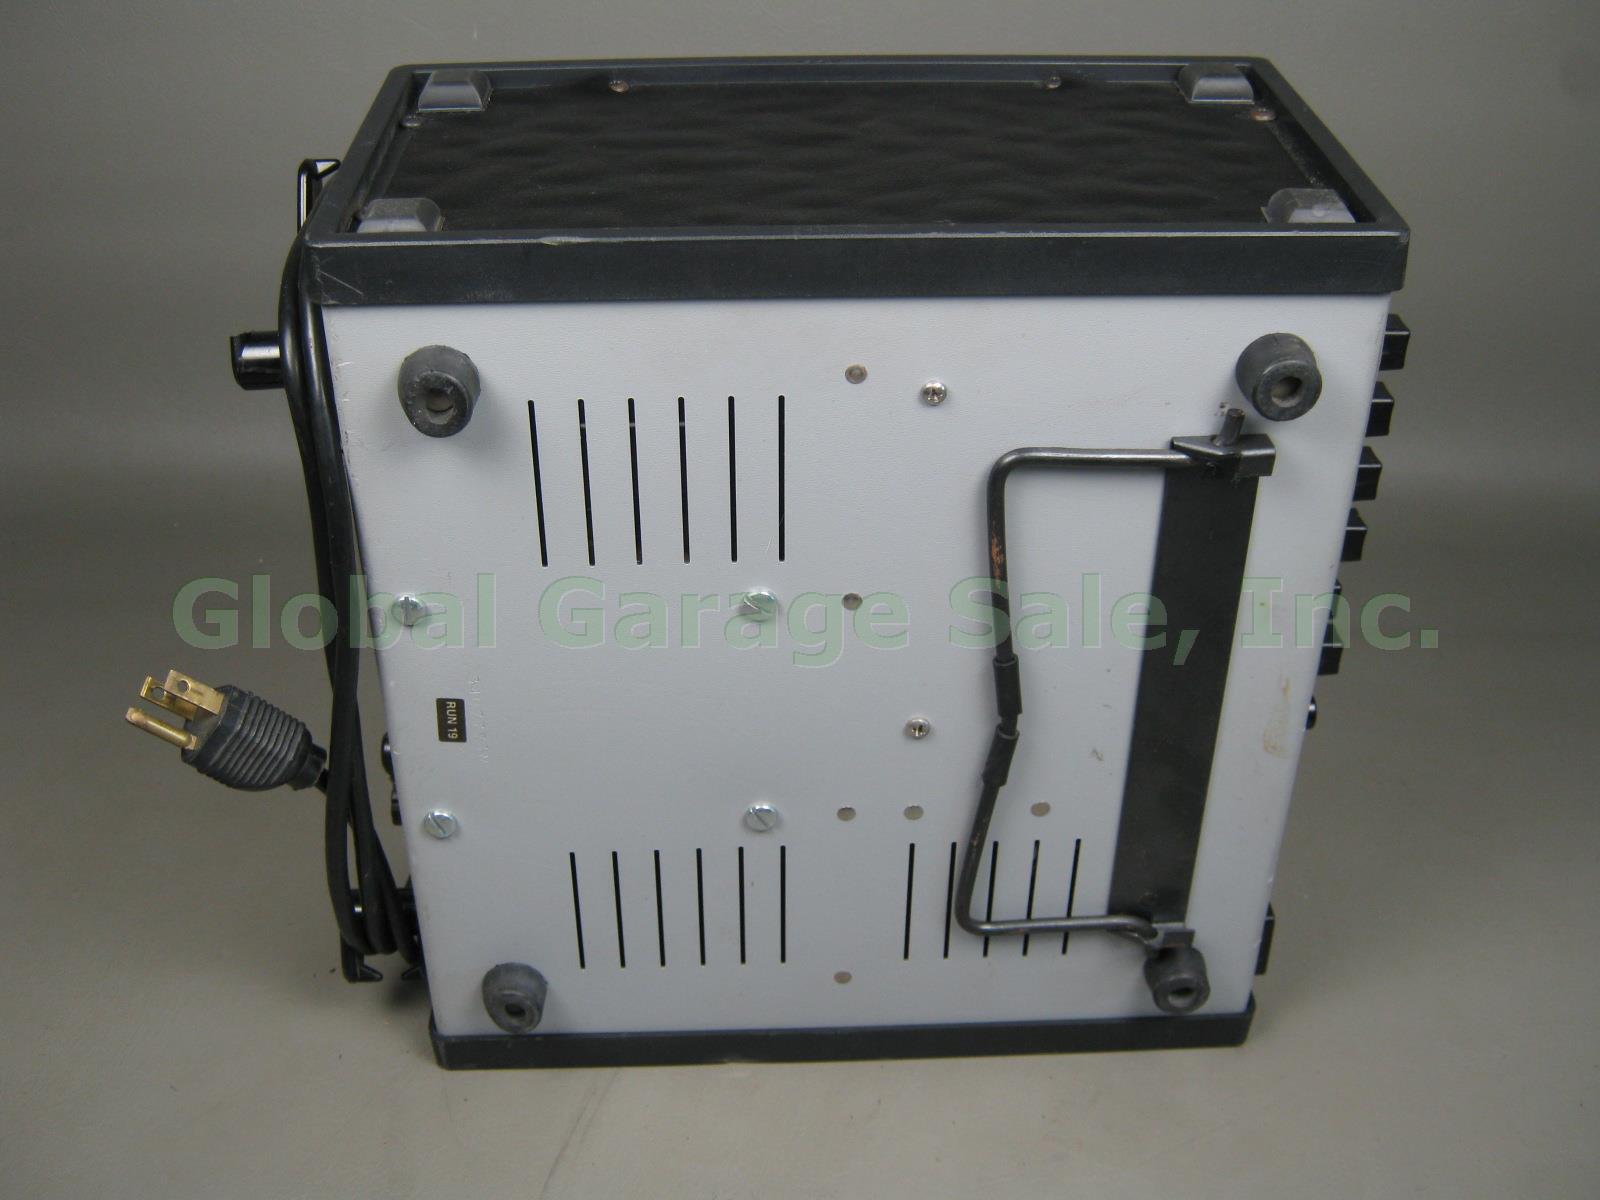 Sencore PR57 AC Powerite Variable Isolation Transformer Safety Analyzer Works NR 5